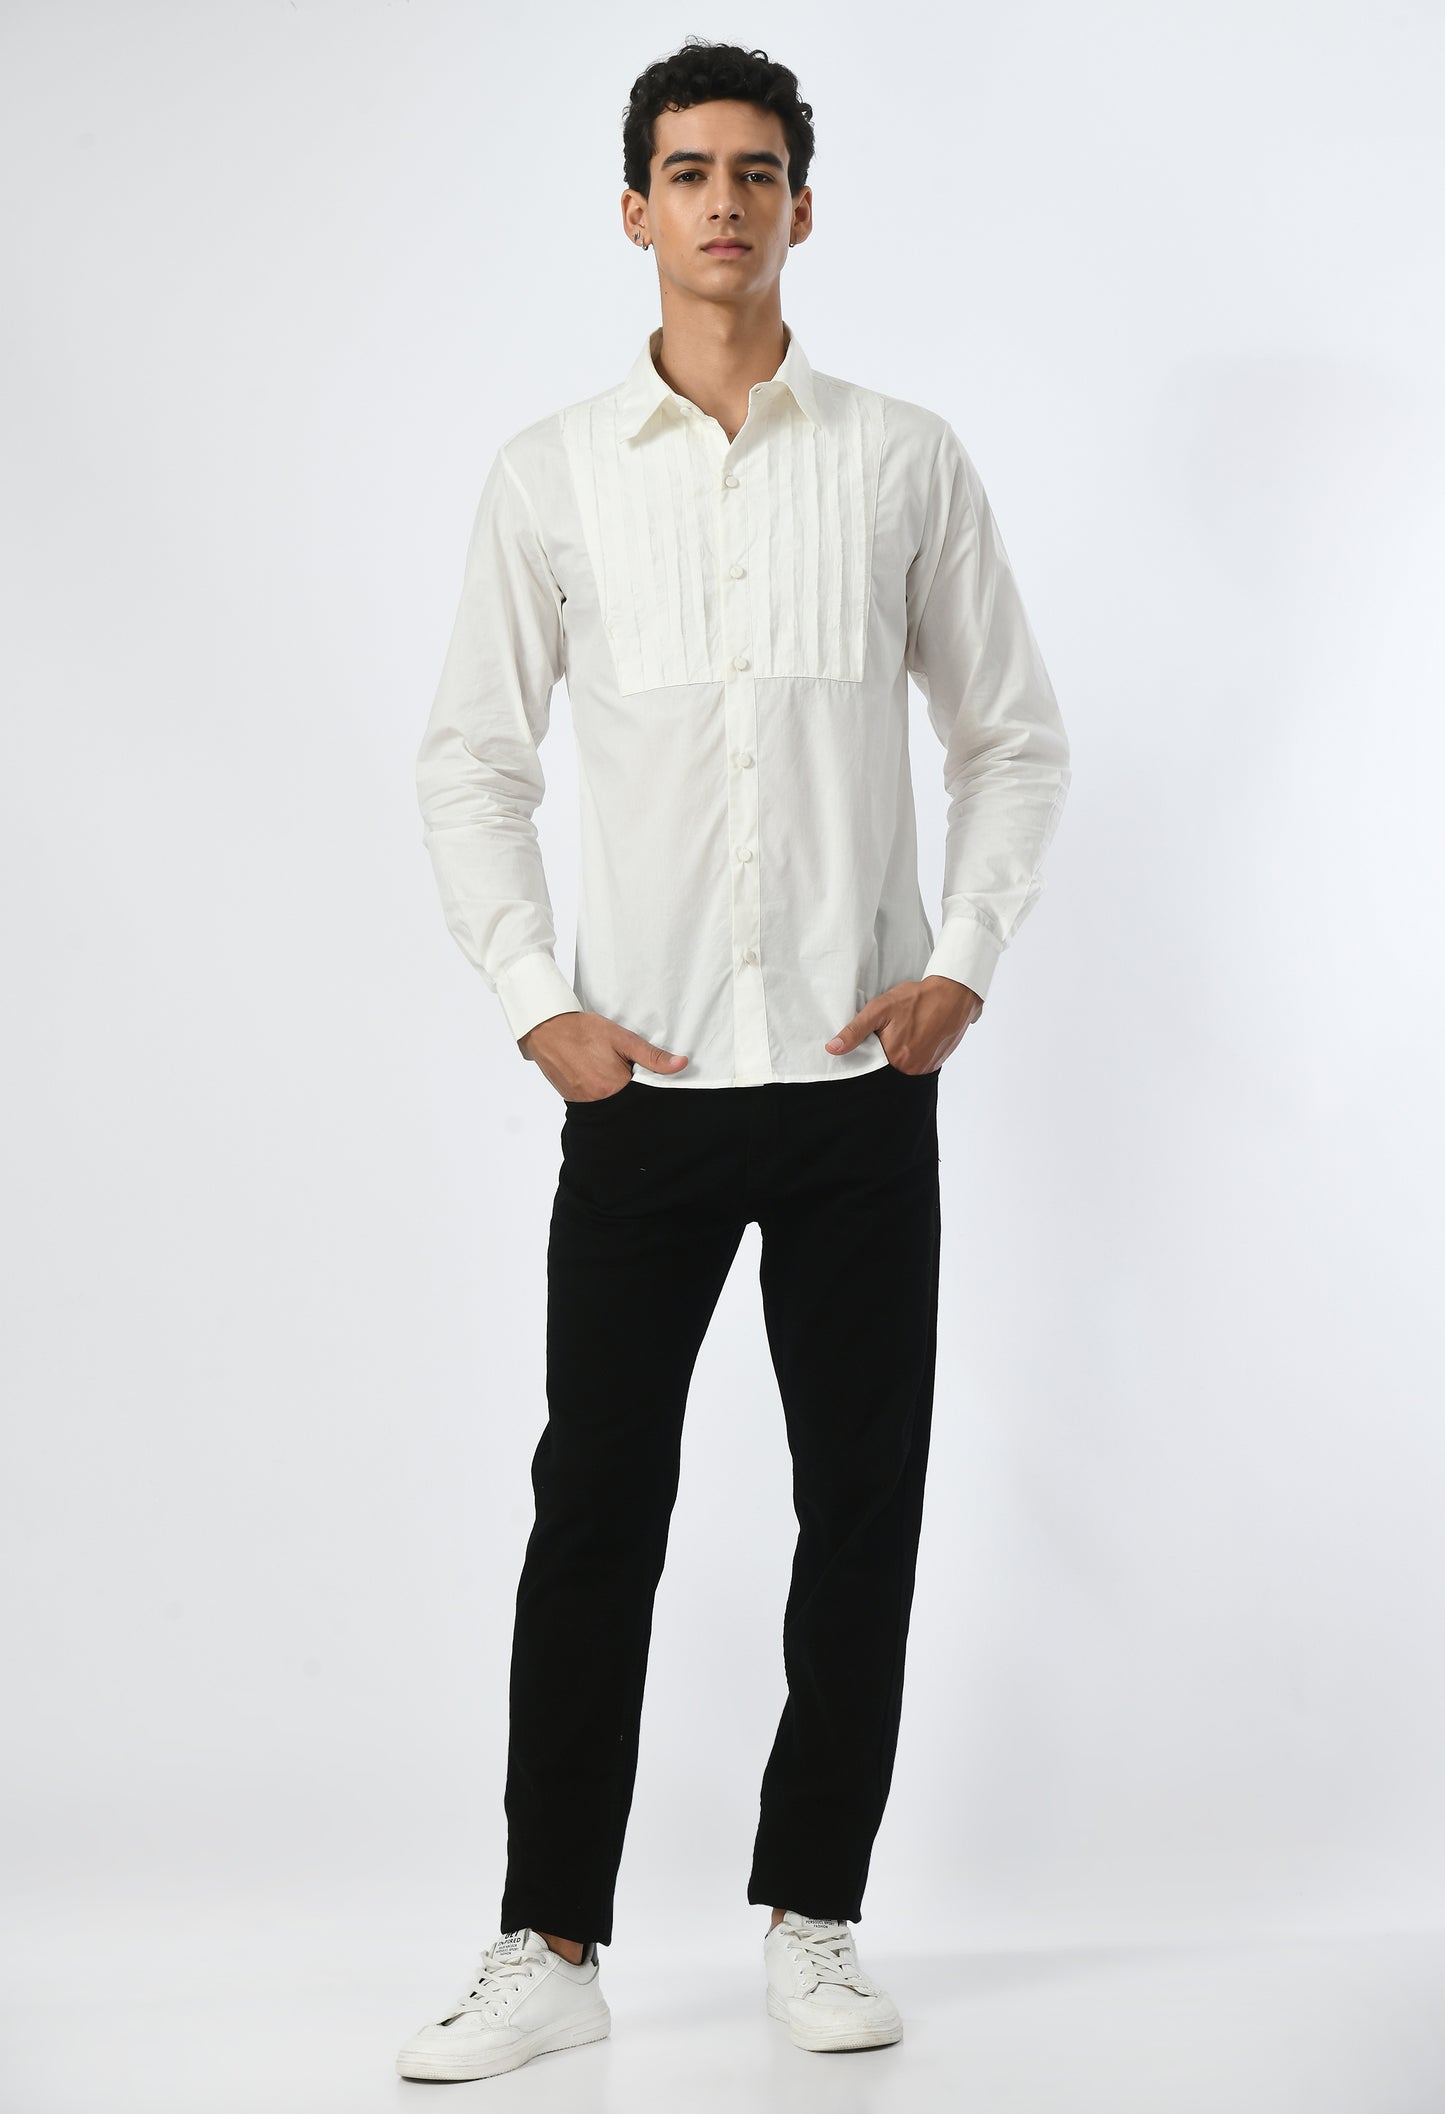 White mens semiformal shirt.